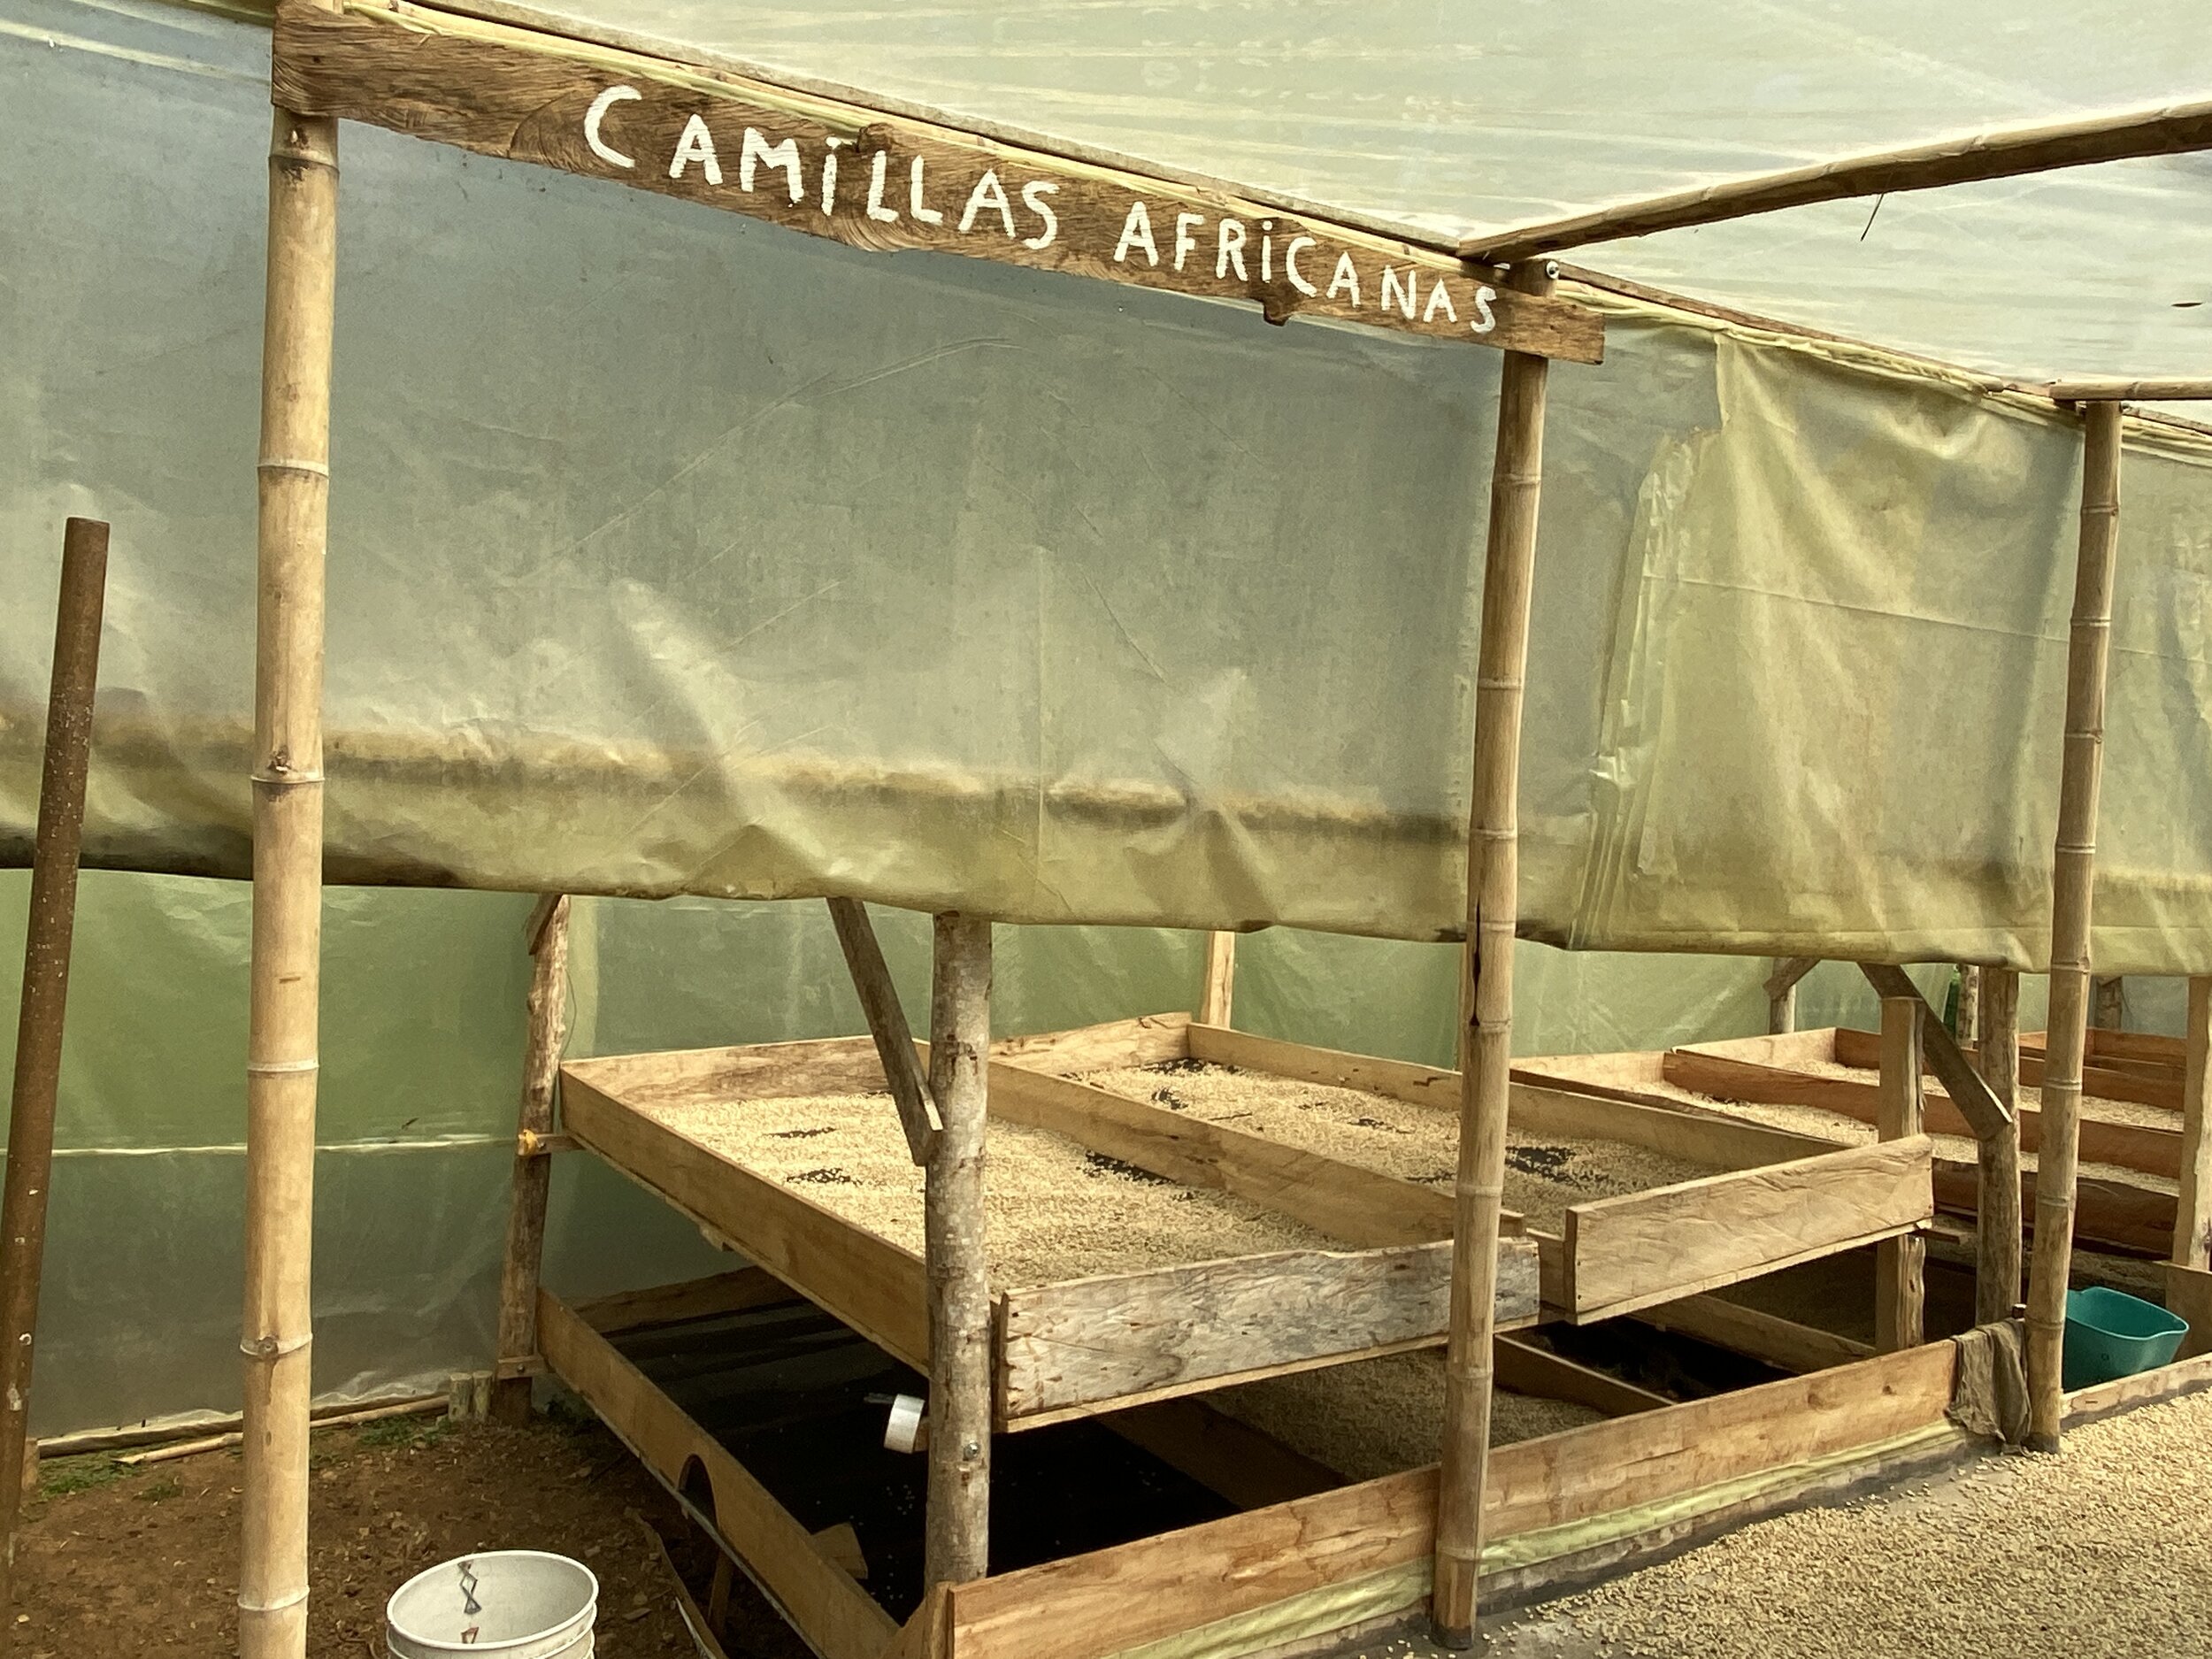  Raised drying beds at La Carmentulia 